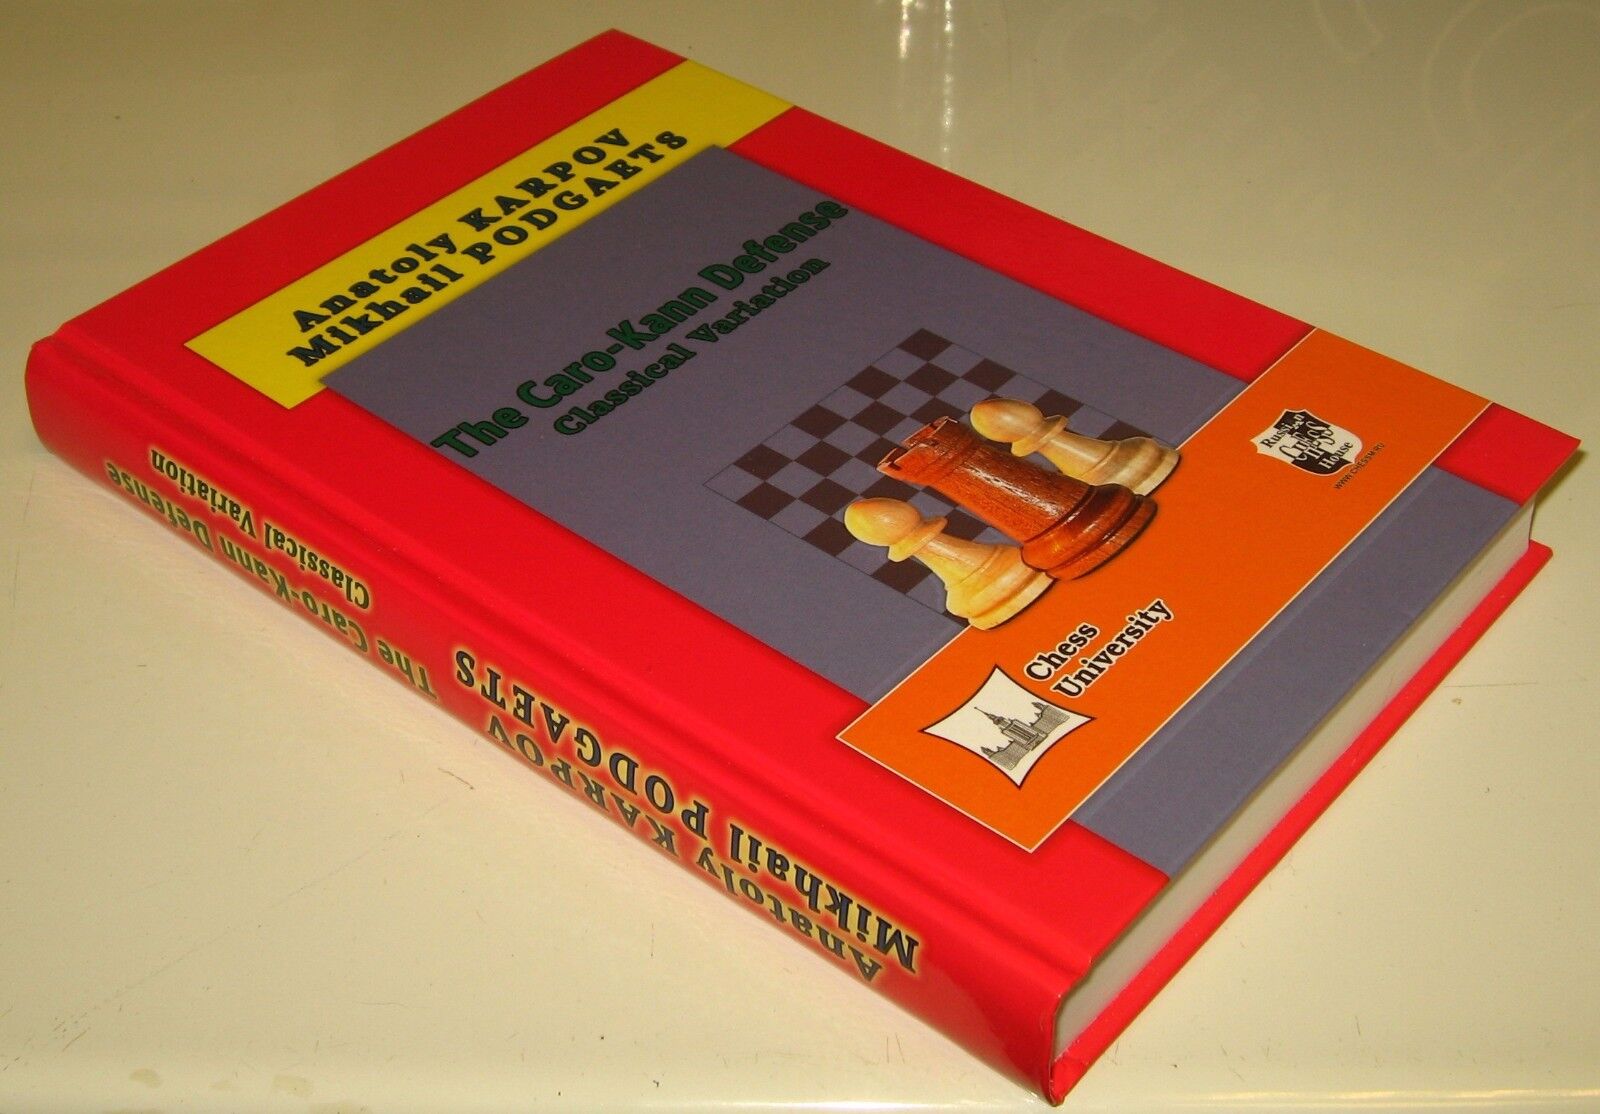 Chess Book: Anatoly Karpov, Mikhail Podgaets. The Caro-Kann Defense. 2016